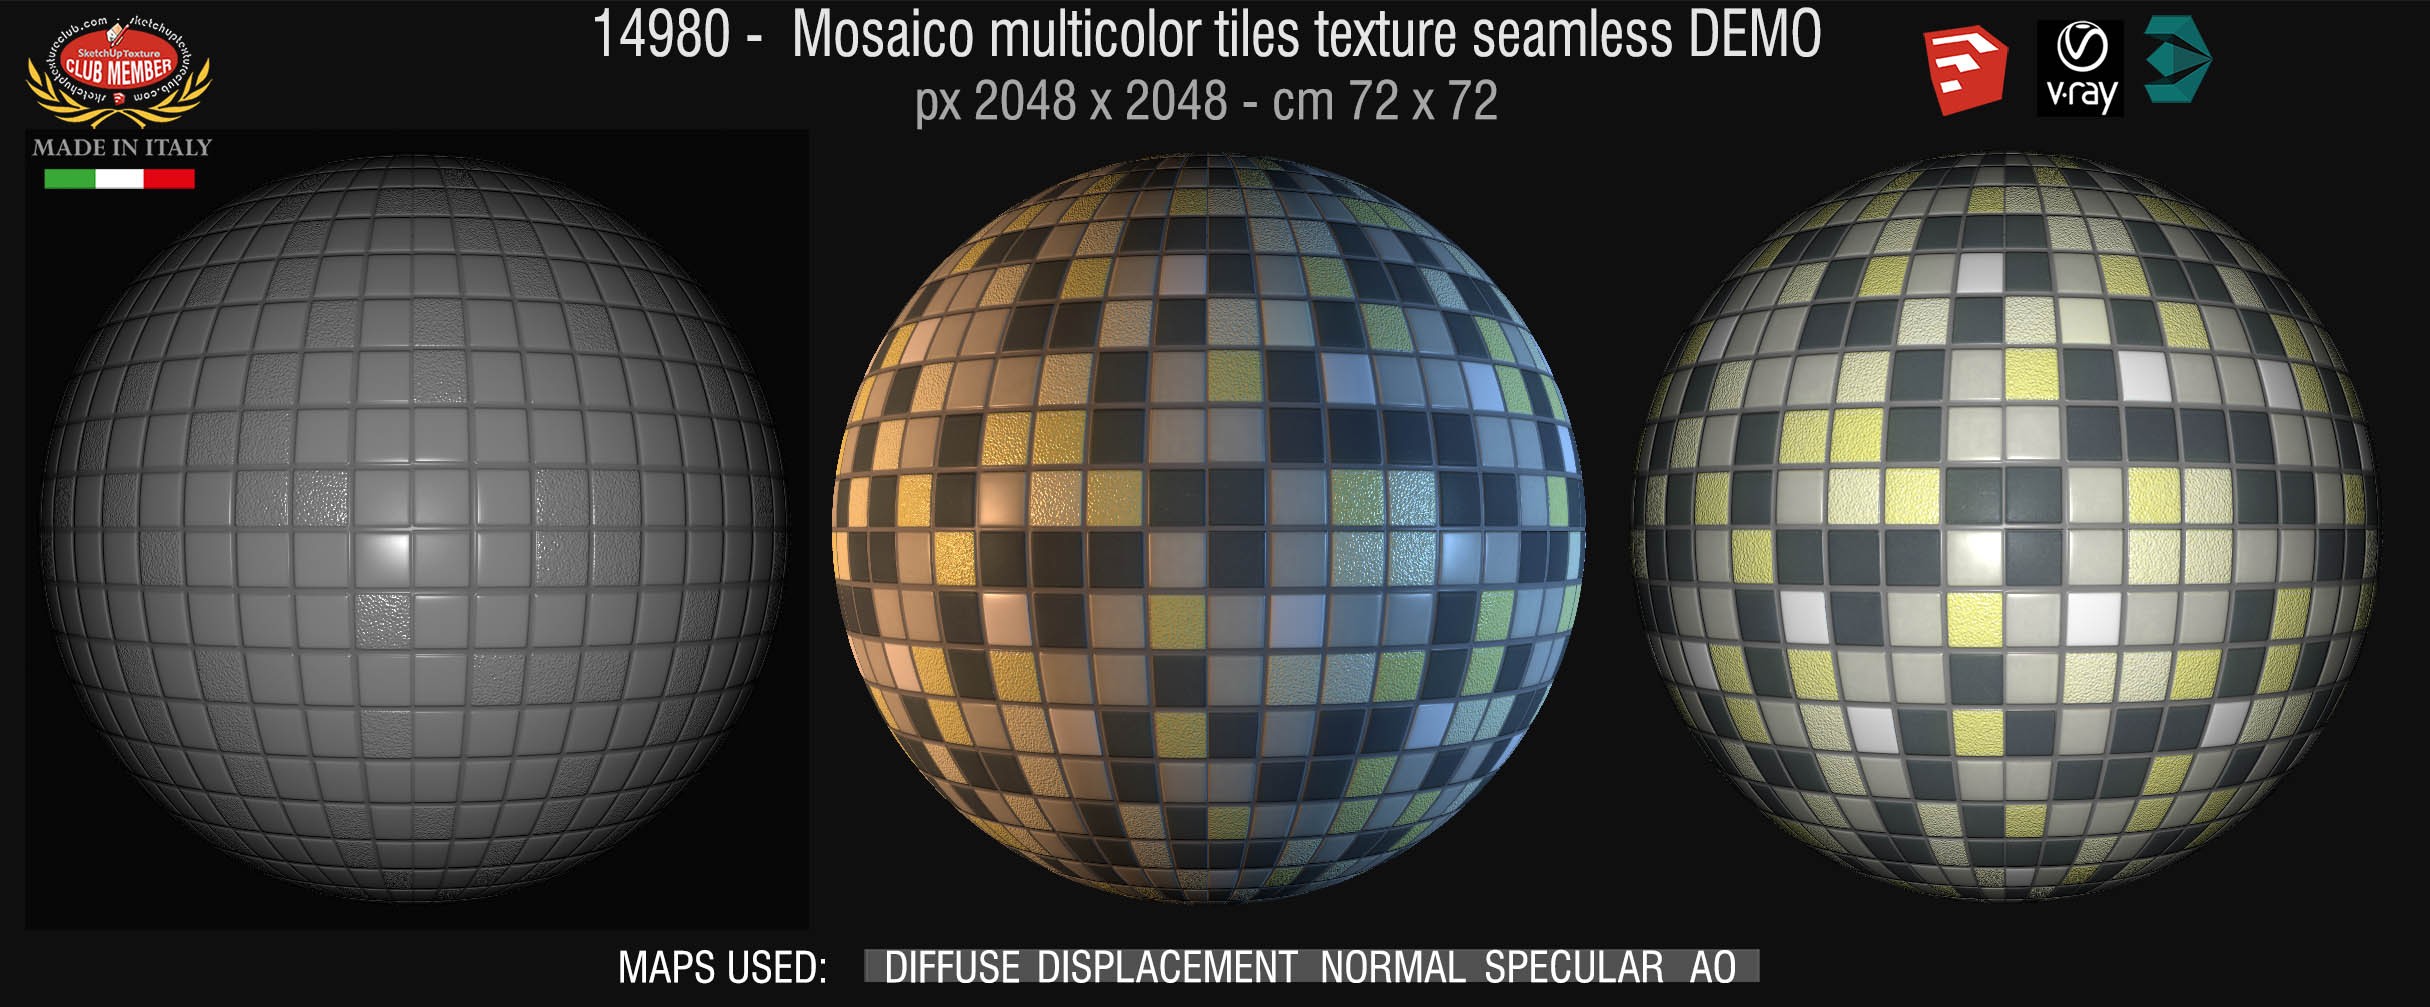 14980 Mosaico multicolor tiles texture seamless + maps DEMO